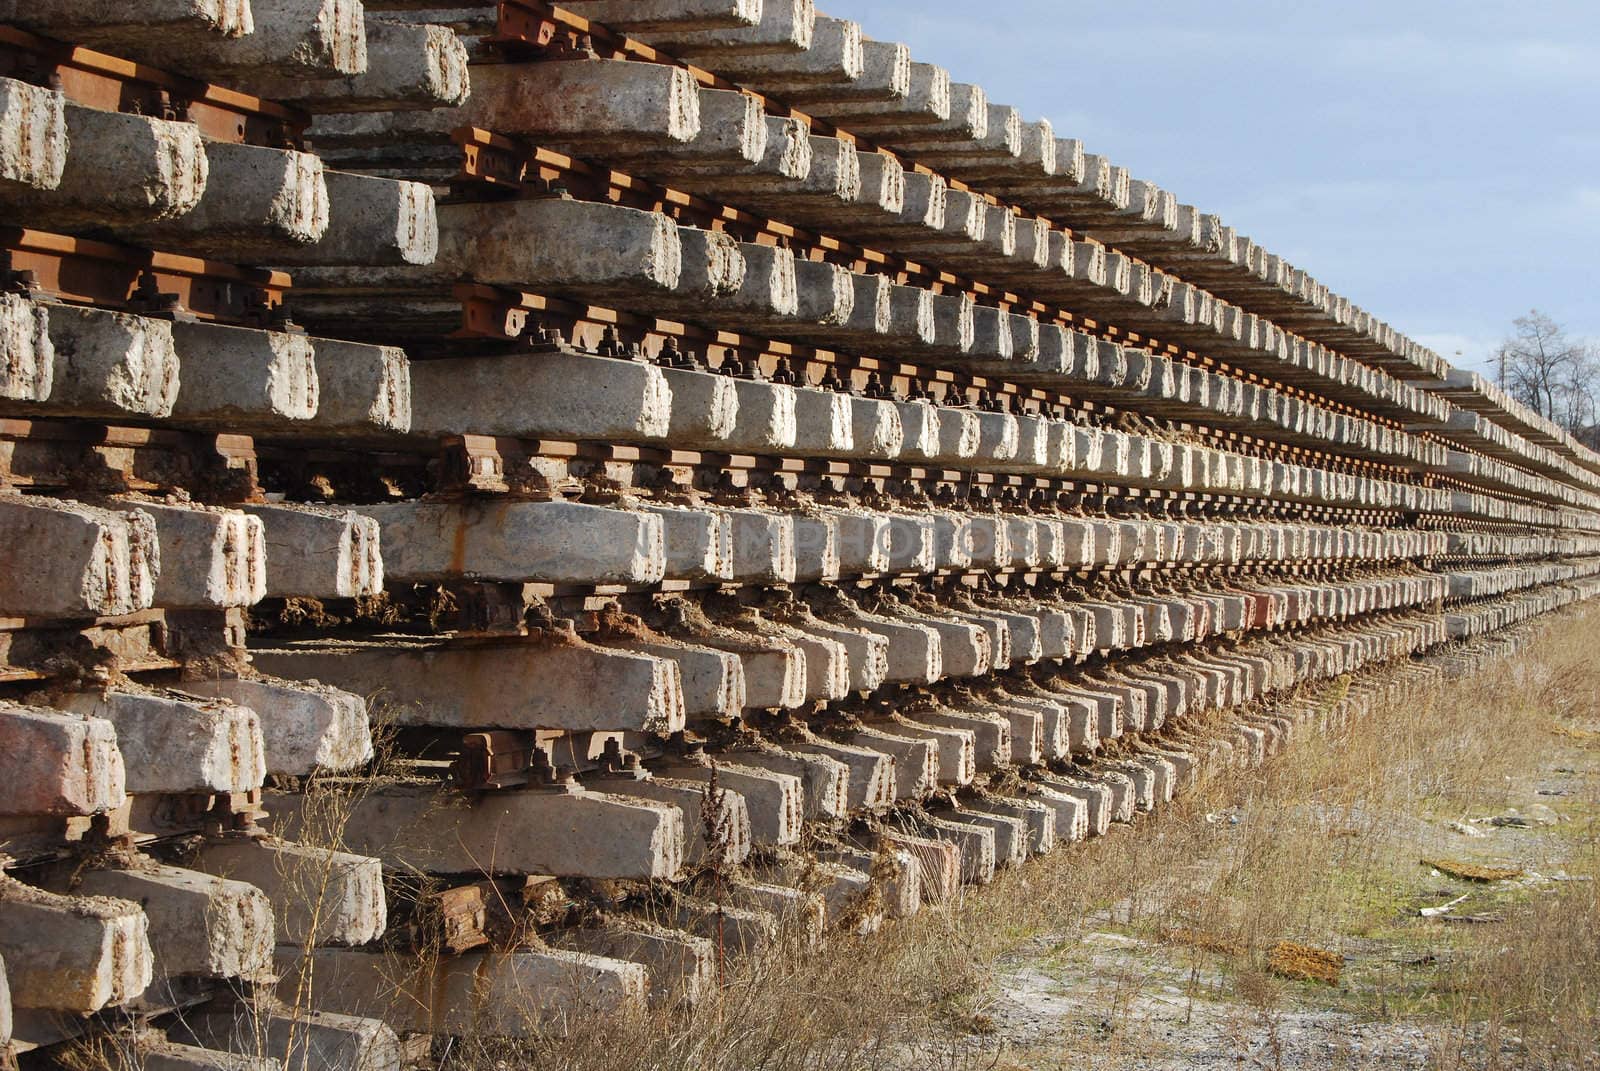 Rows of rails and cross-ties by varbenov